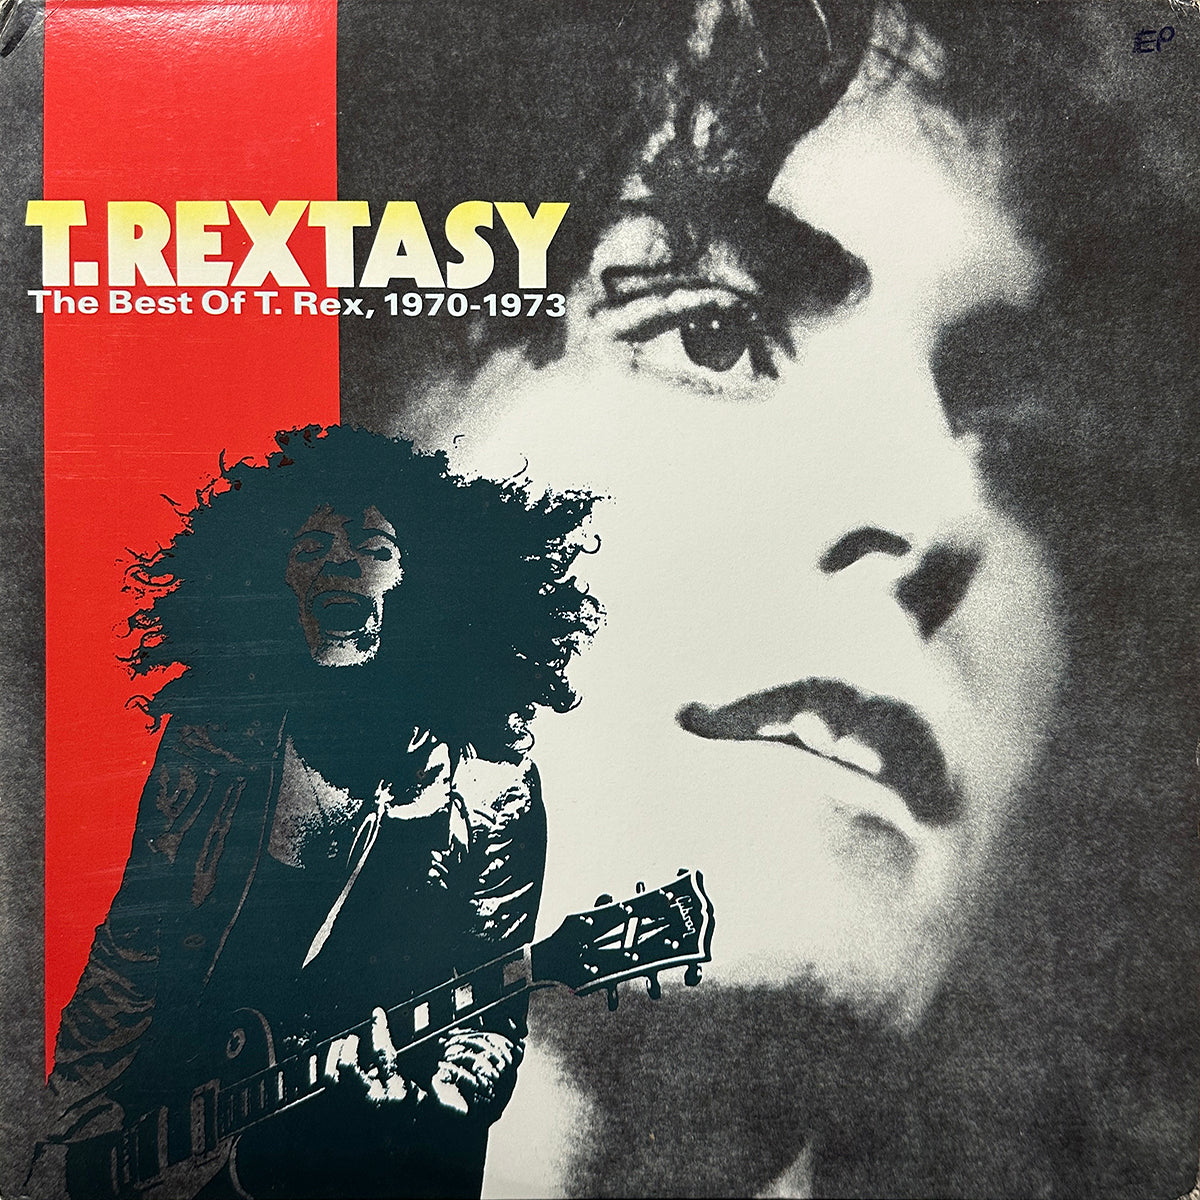 T. Rextasy: The Best Of T. Rex, 1970-1973